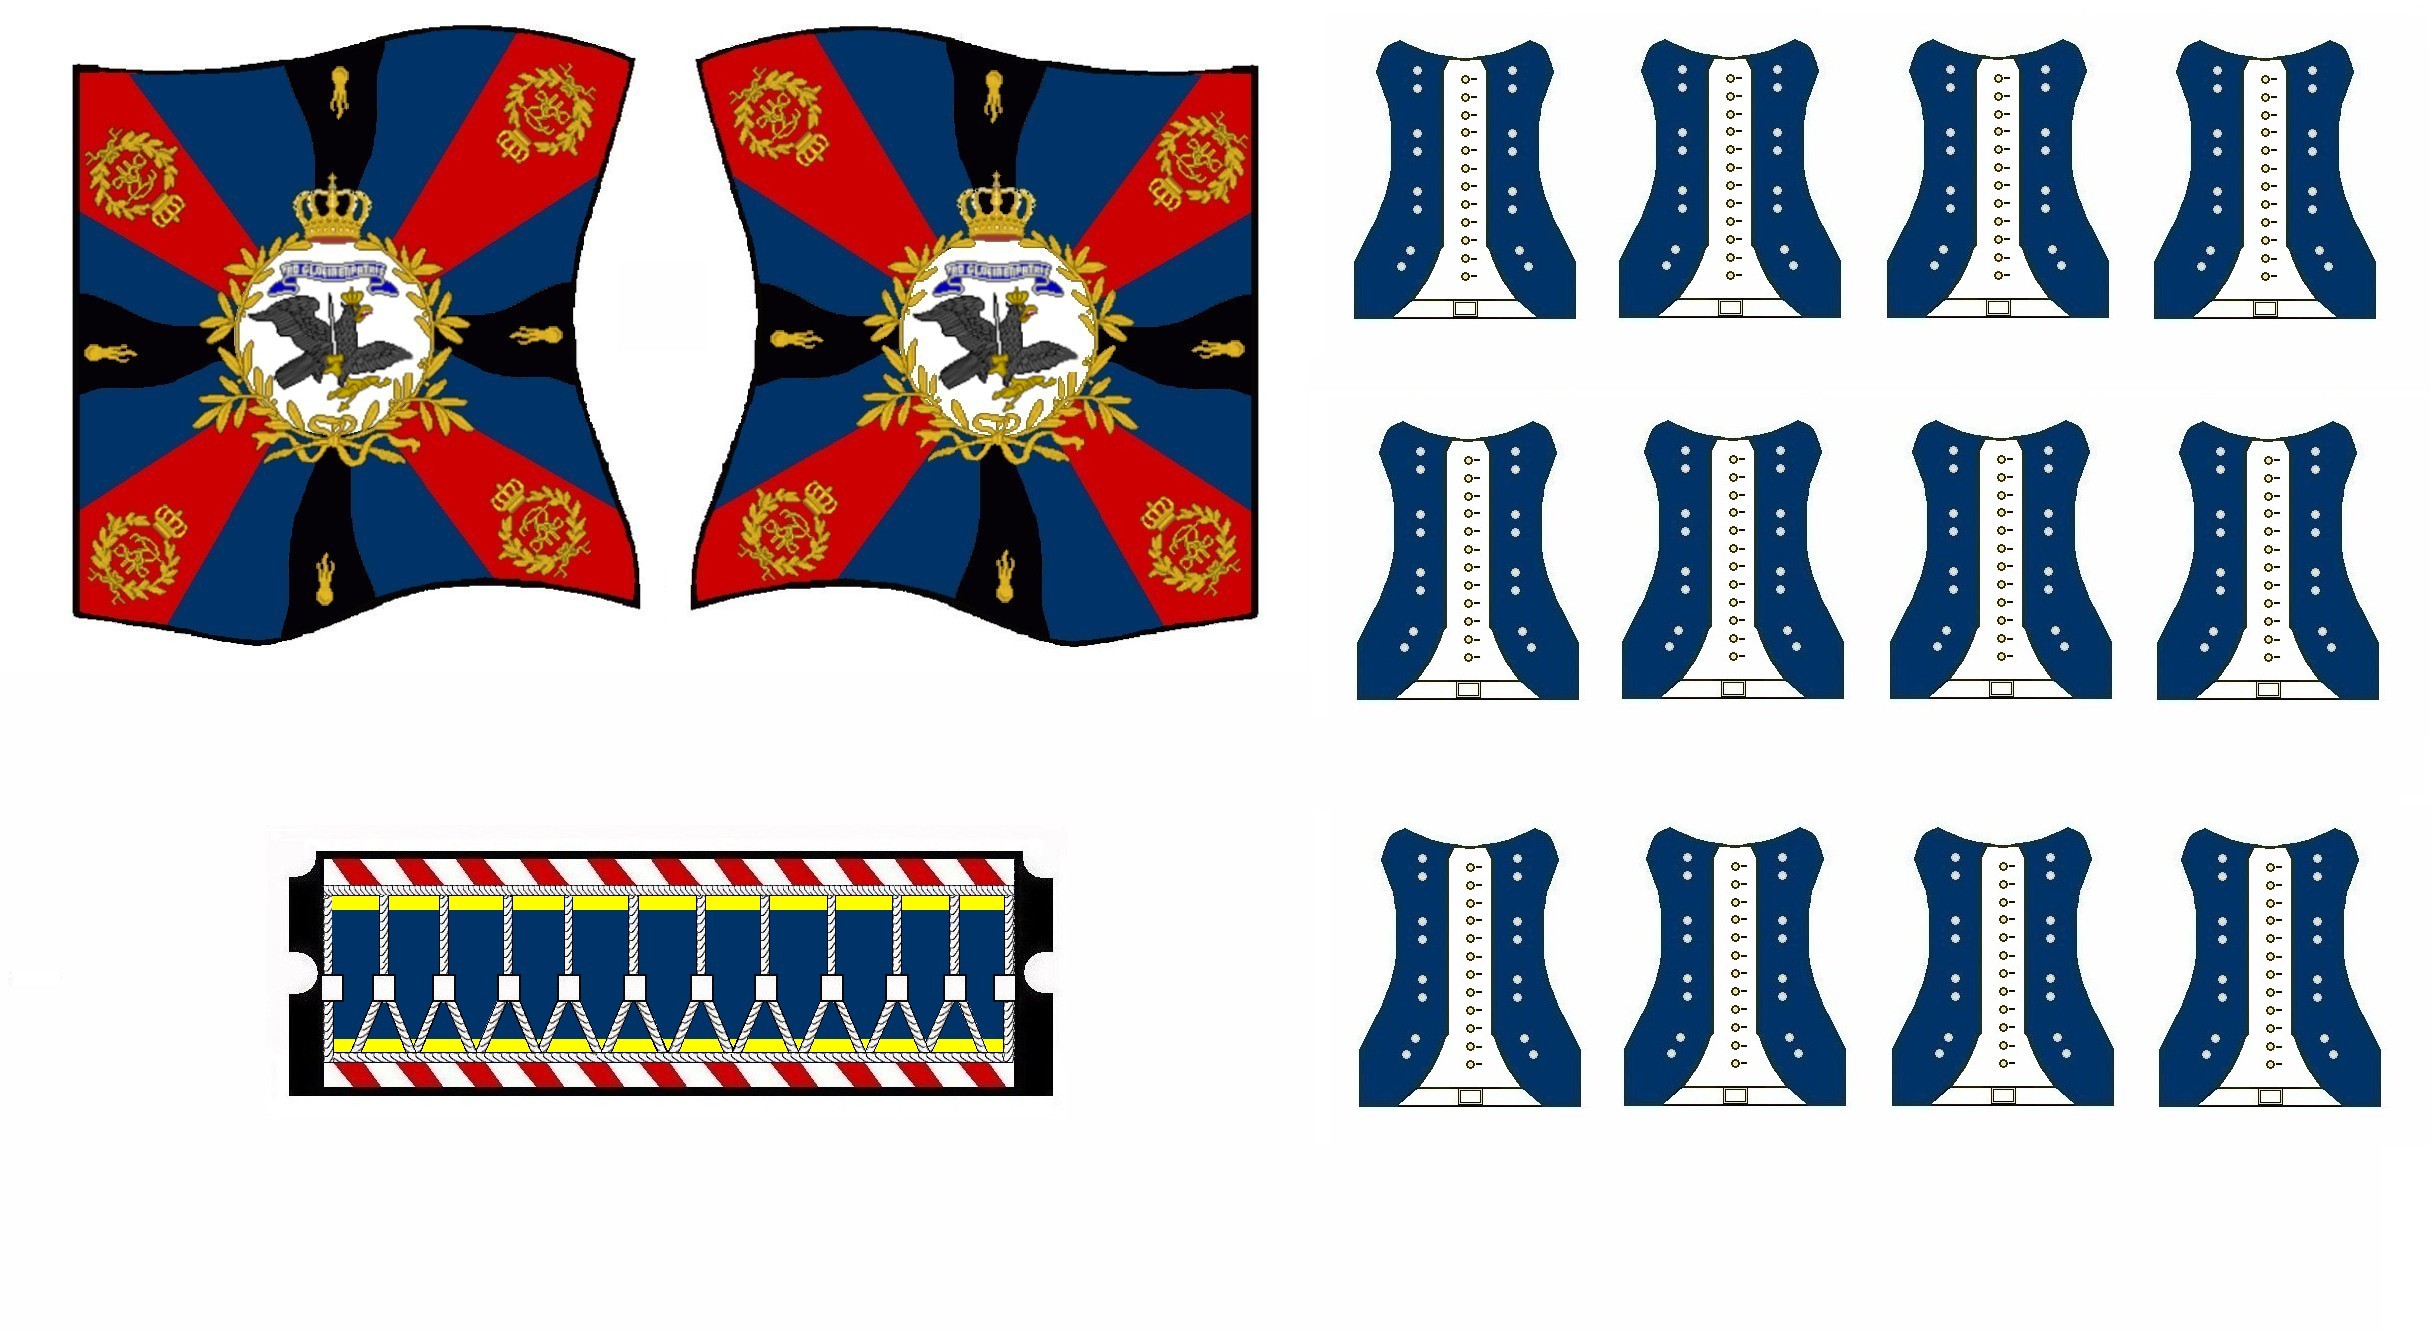 Uniform_258_Preussisches_32th_Musketeer_Regiment